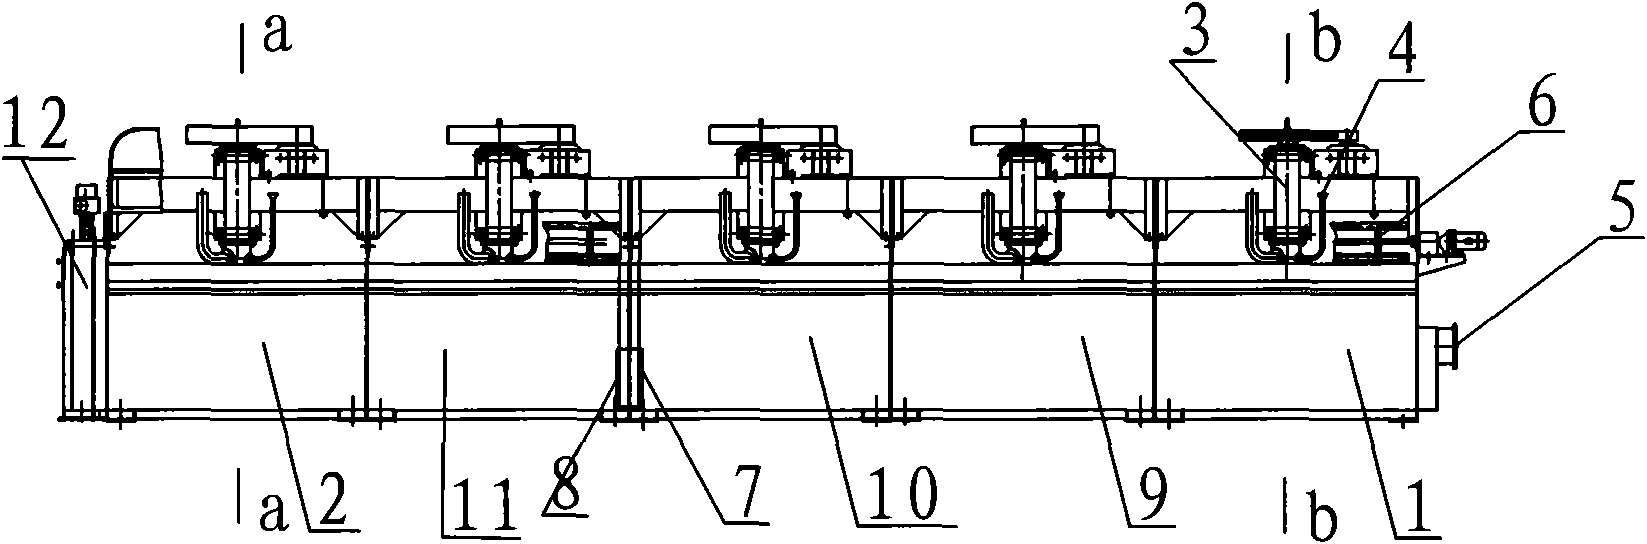 Three-product coal slurry flotation machine and system